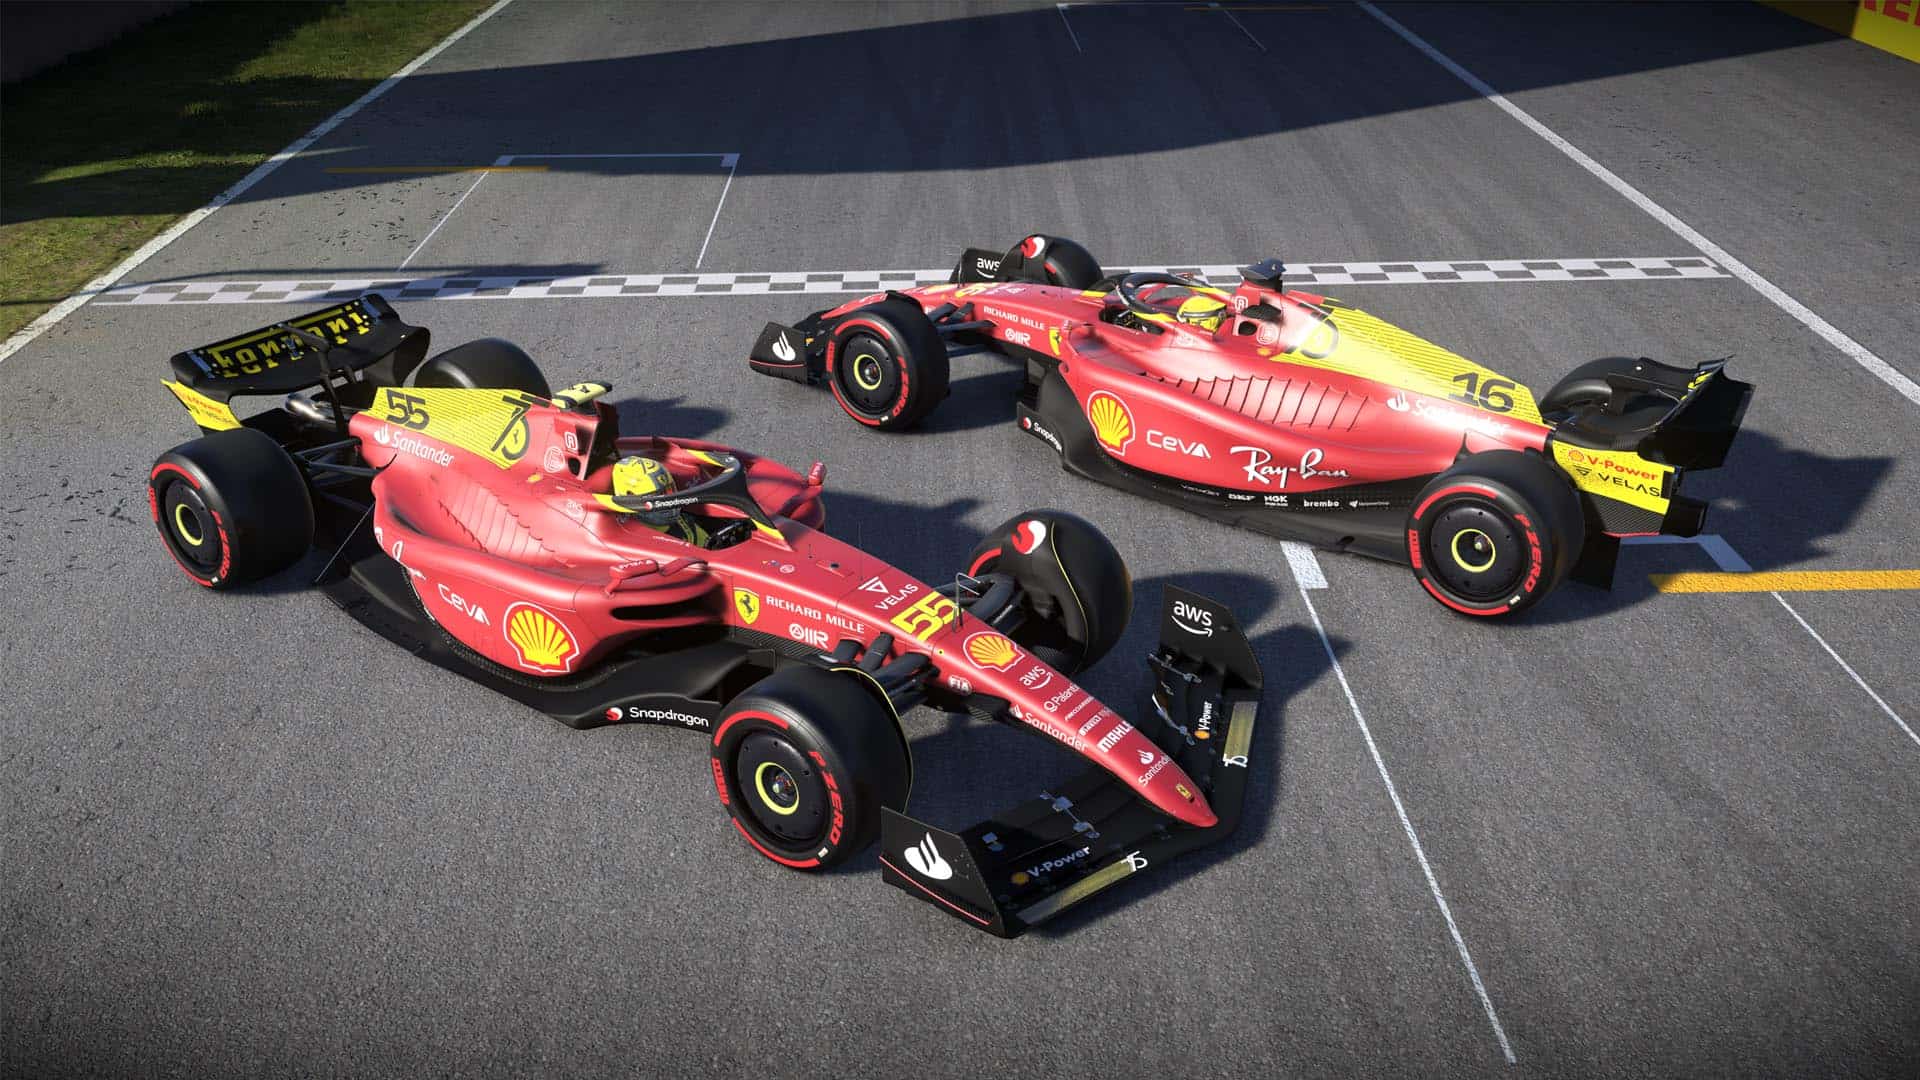 Ferrari’s celebratory Italian GP livery coming to F1 22 game